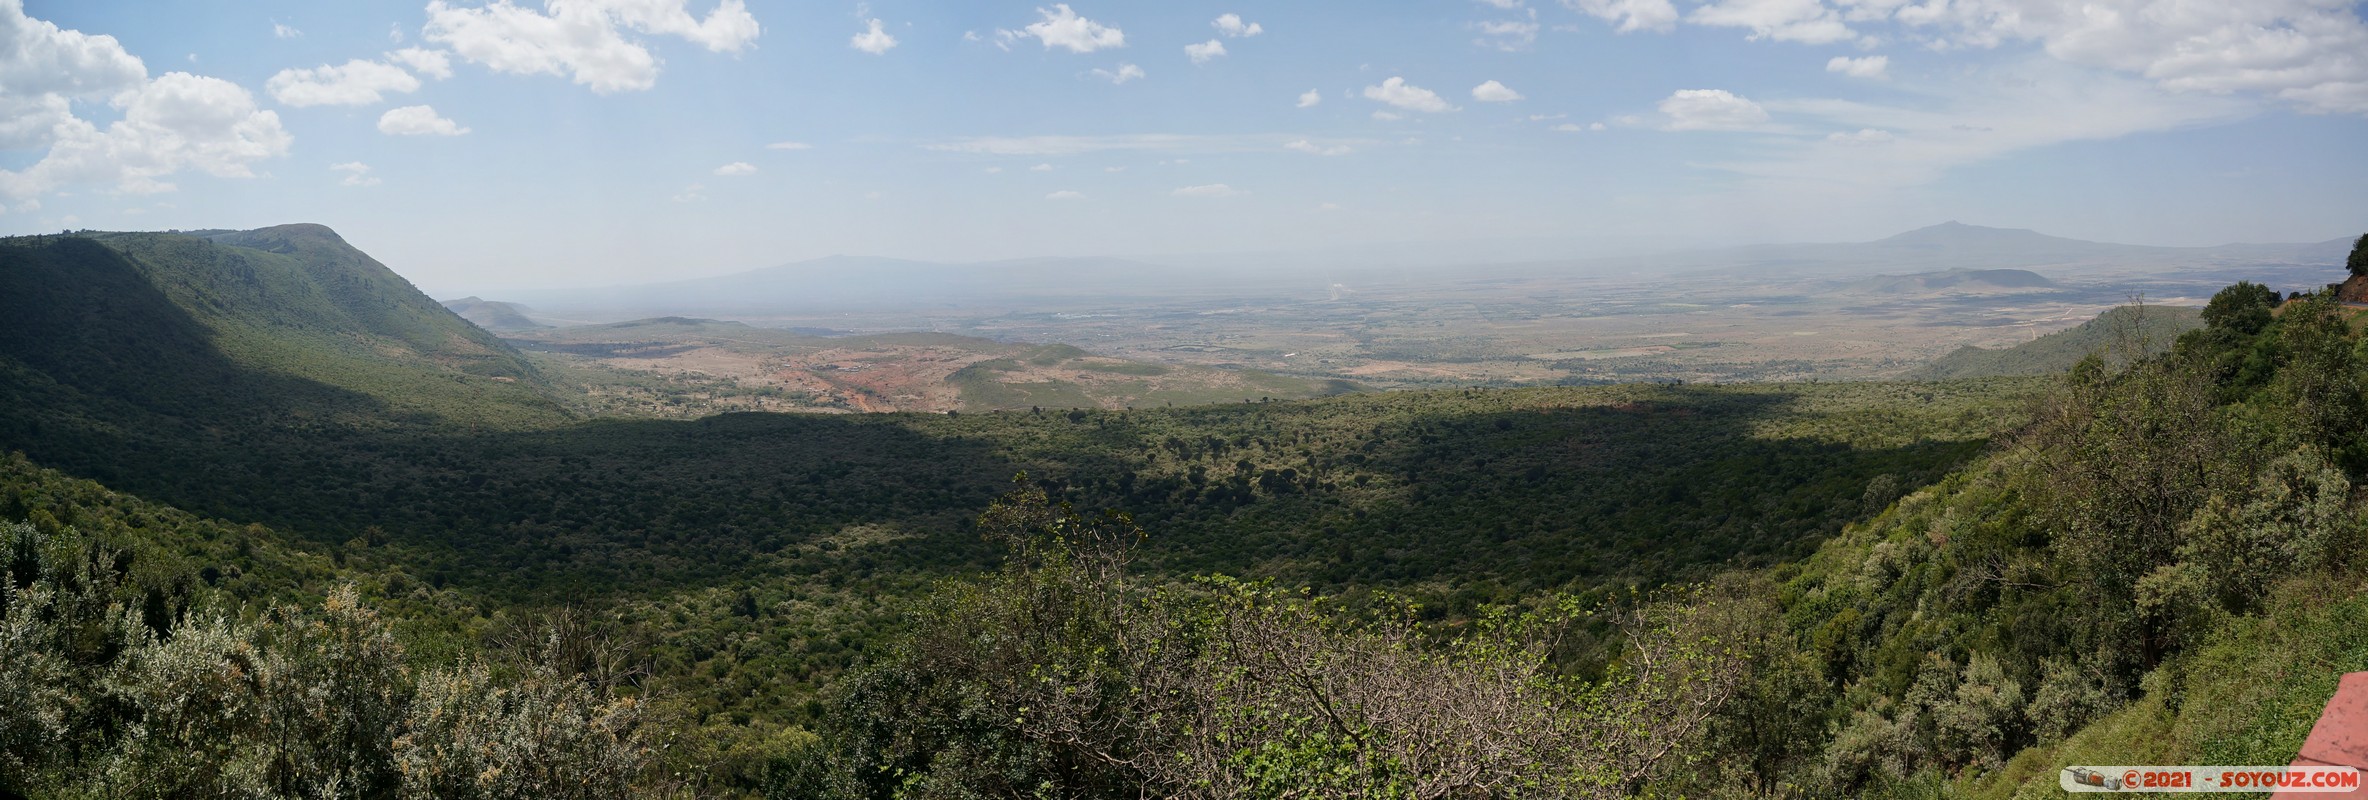 Rift Valley - Jambo Scenic View - panorama
Mots-clés: geo:lat=-1.05609722 geo:lon=36.60275280 geotagged KEN Kenya Larkhill Nakuru paysage Rift Valley panorama